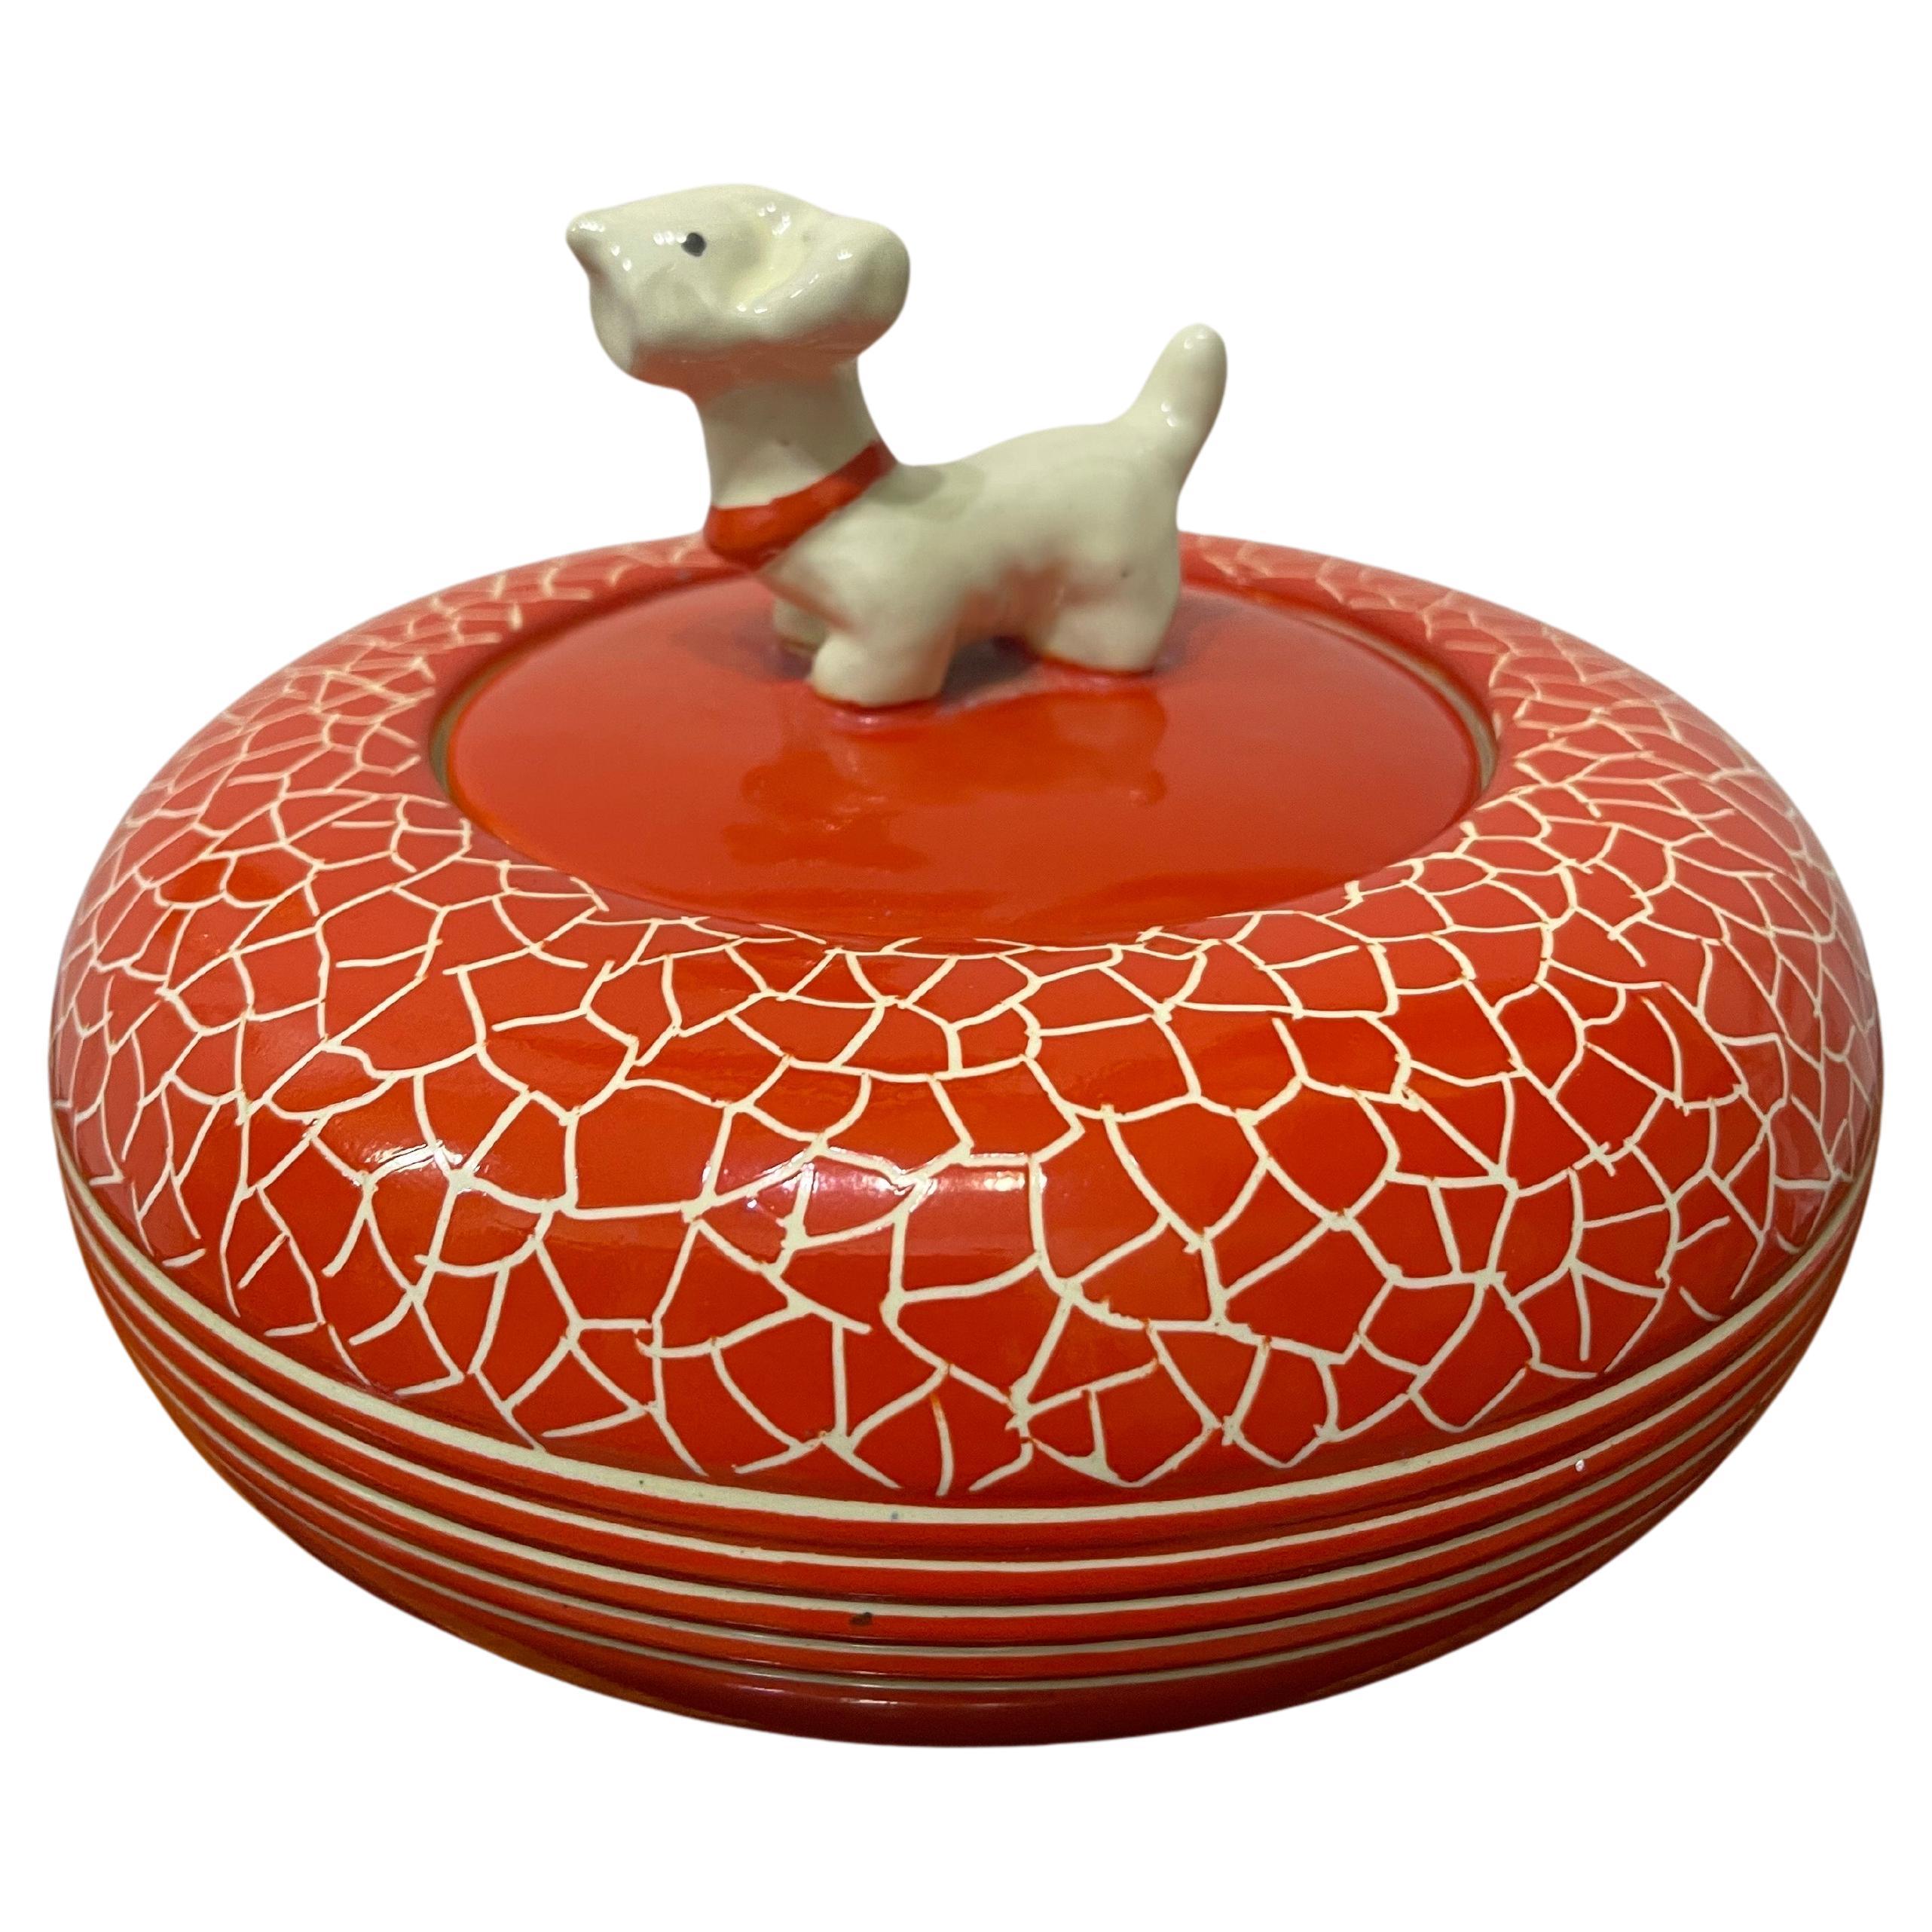 Italienische dekorative Keramikschachtel aus Perugia, Koralle, rot, Rometti, Hund, 1940 